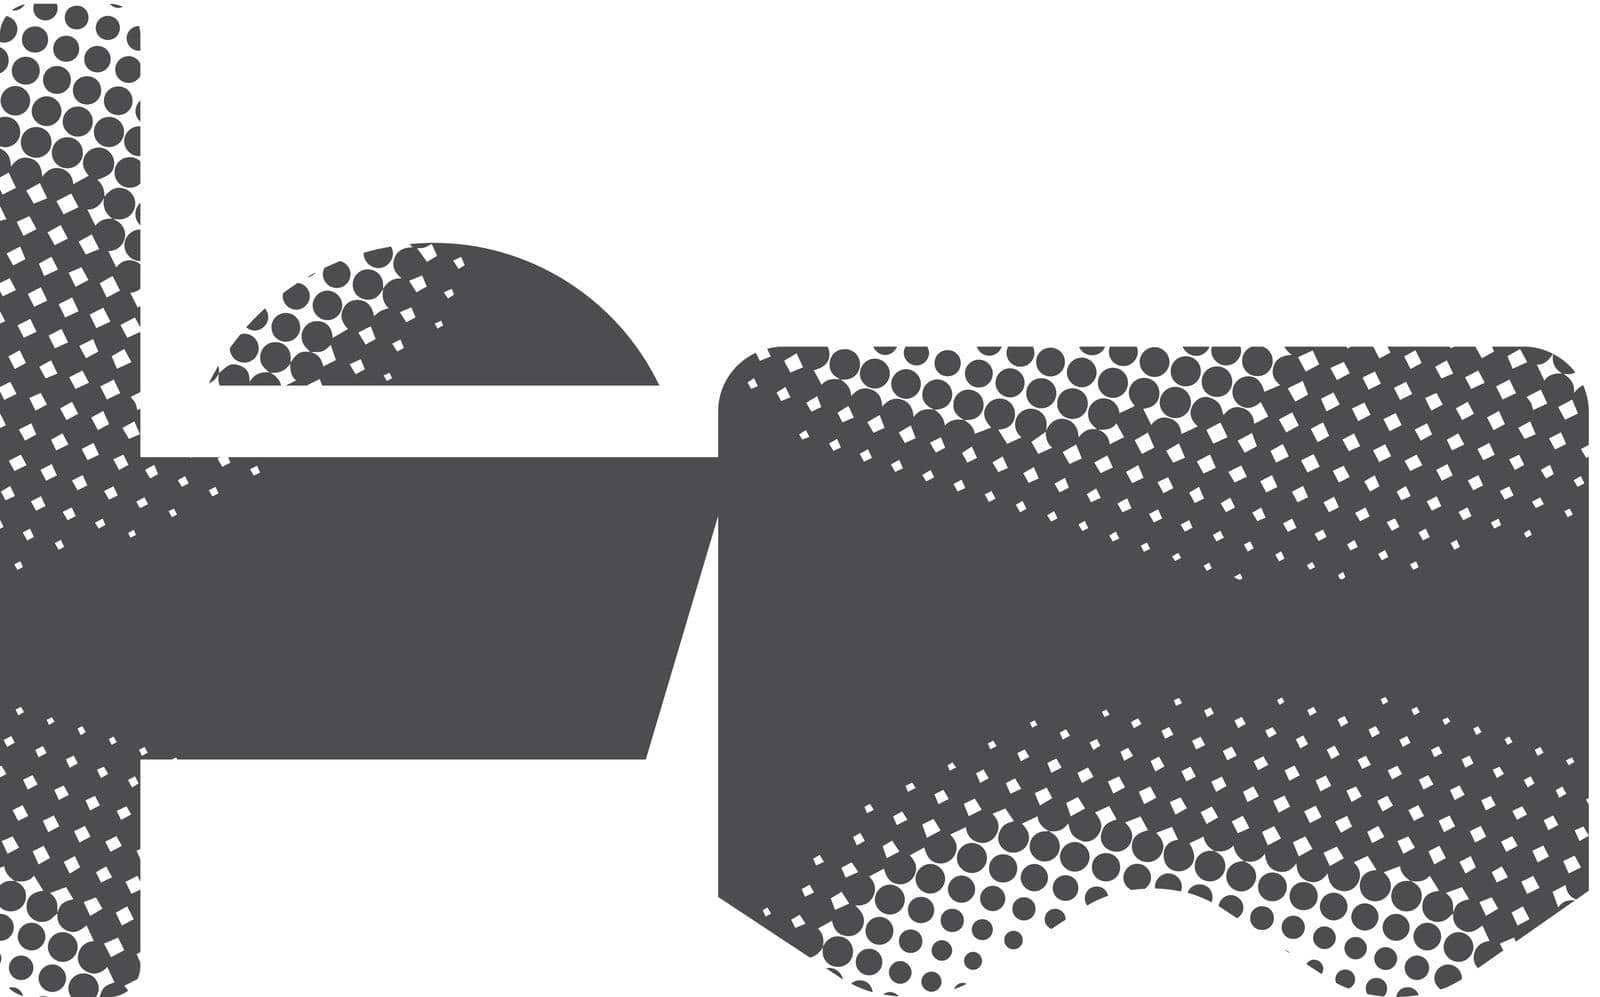 Hotel symbol icon in halftone style. Black and white monochrome vector illustration.